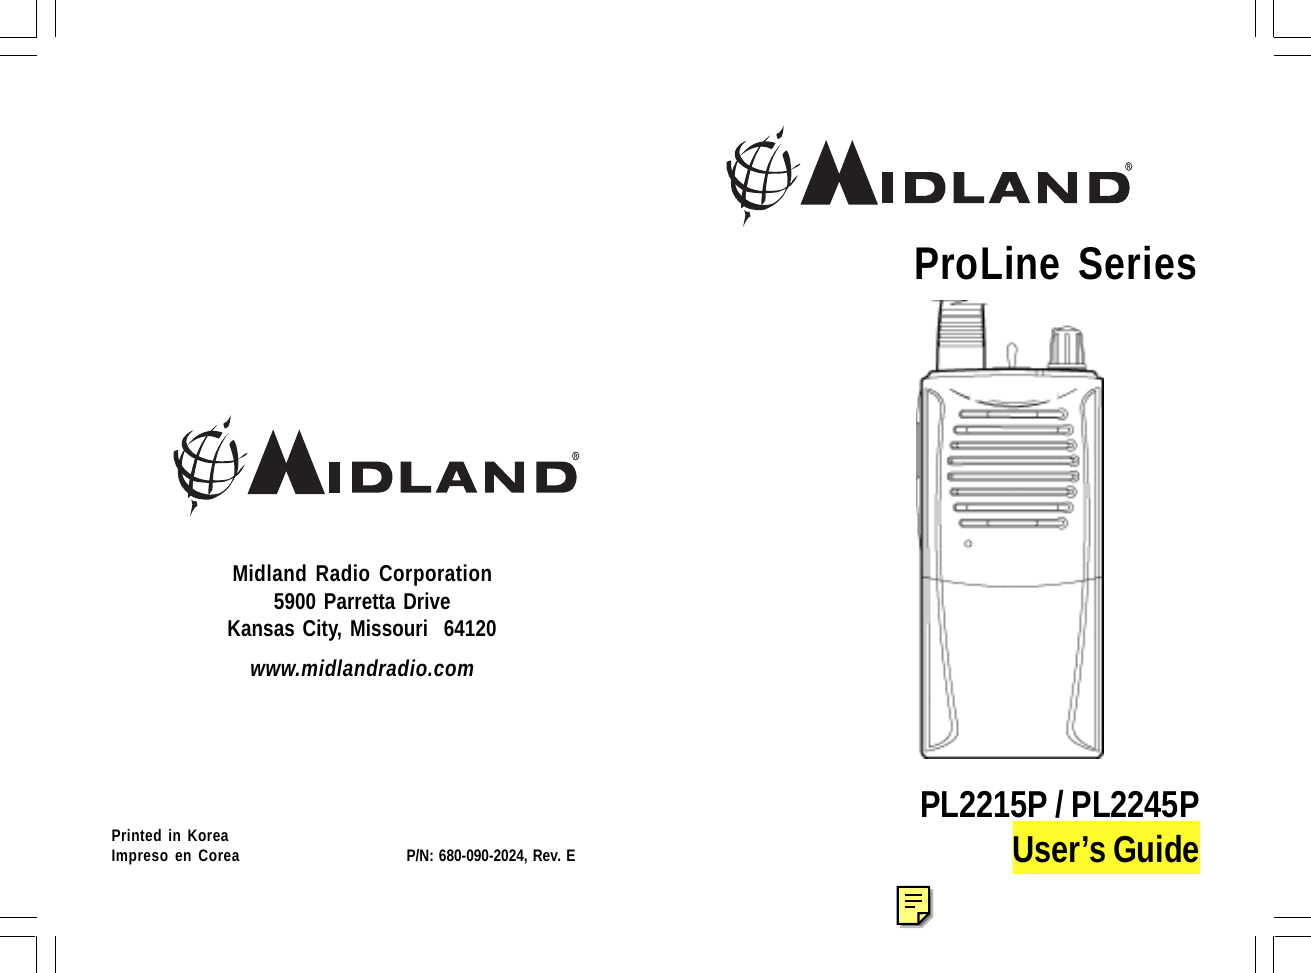 ProLine SeriesPL2215P / PL2245PUser’s GuideMidland Radio Corporation5900 Parretta DriveKansas City, Missouri  64120www.midlandradio.comPrinted in KoreaImpreso en Corea               P/N: 680-090-2024, Rev. E